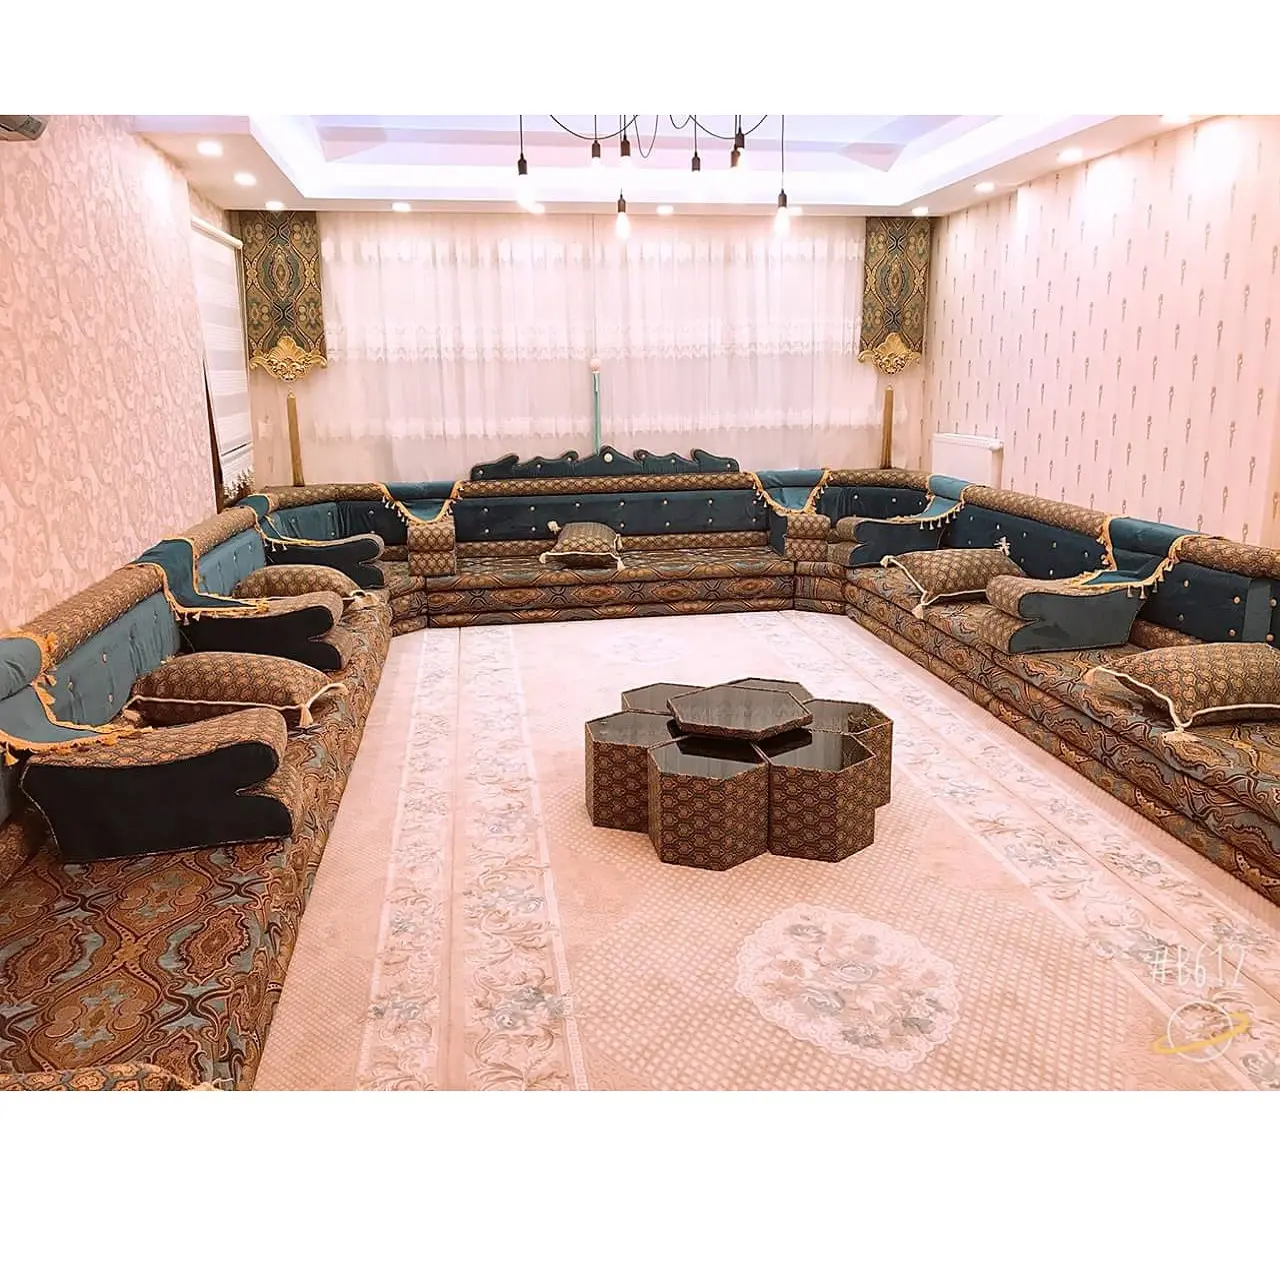 Ottoman Style Sofa Arabic Majlis Oriental Floor Seating | Sitting Height 35cm | Sofa + Wool Carpet + Curtain + Table Set FULL